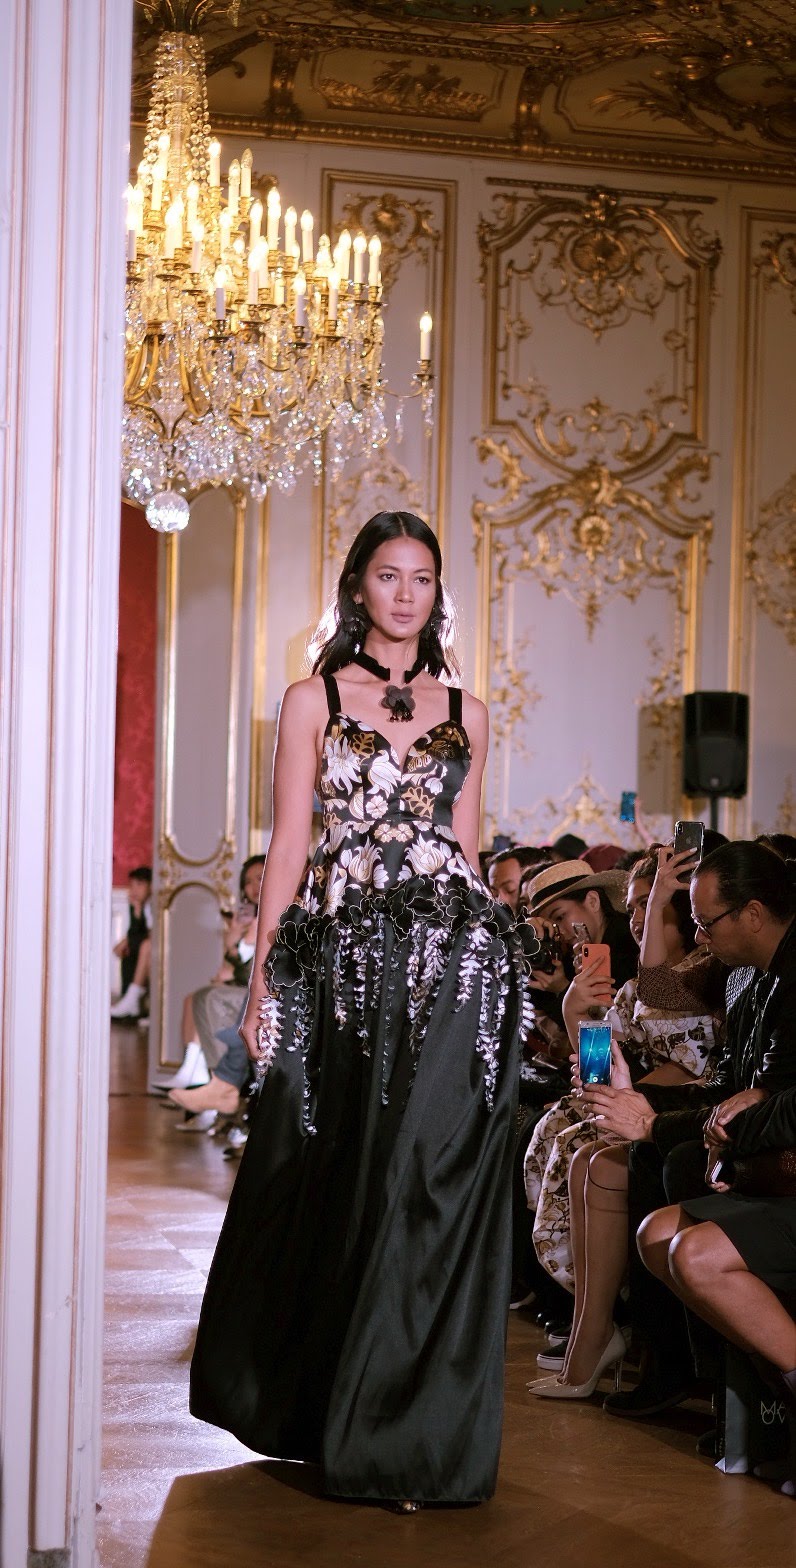 Gaya 7 seleb fashion show di luar negeri, Dinda Hauw anggun pakai gaun